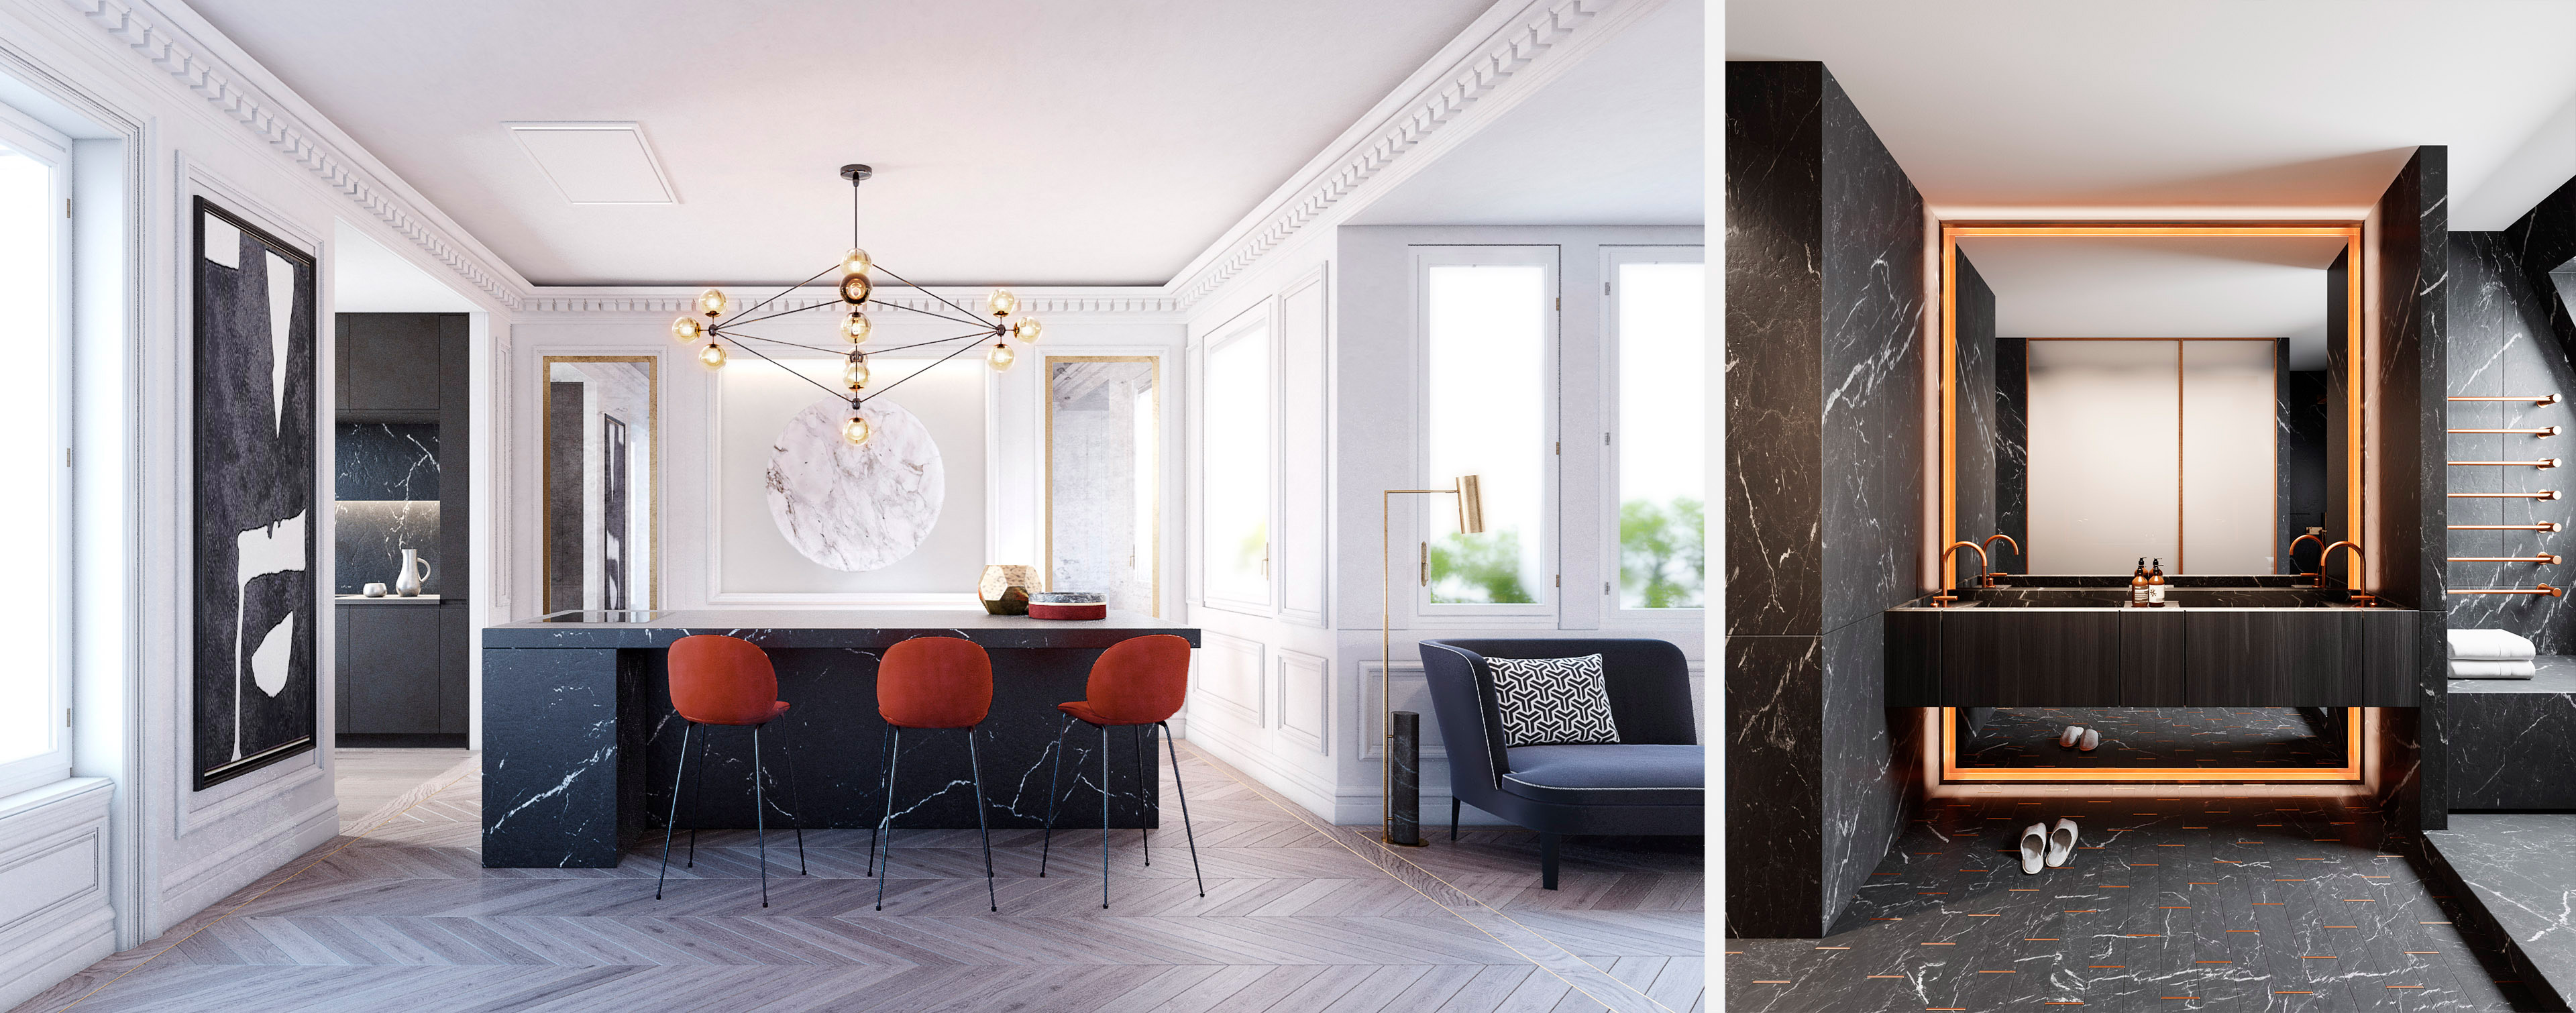 luv studio luxury architects paris saint germain penthouse apartment IMG 02 - St Germain Apartment 